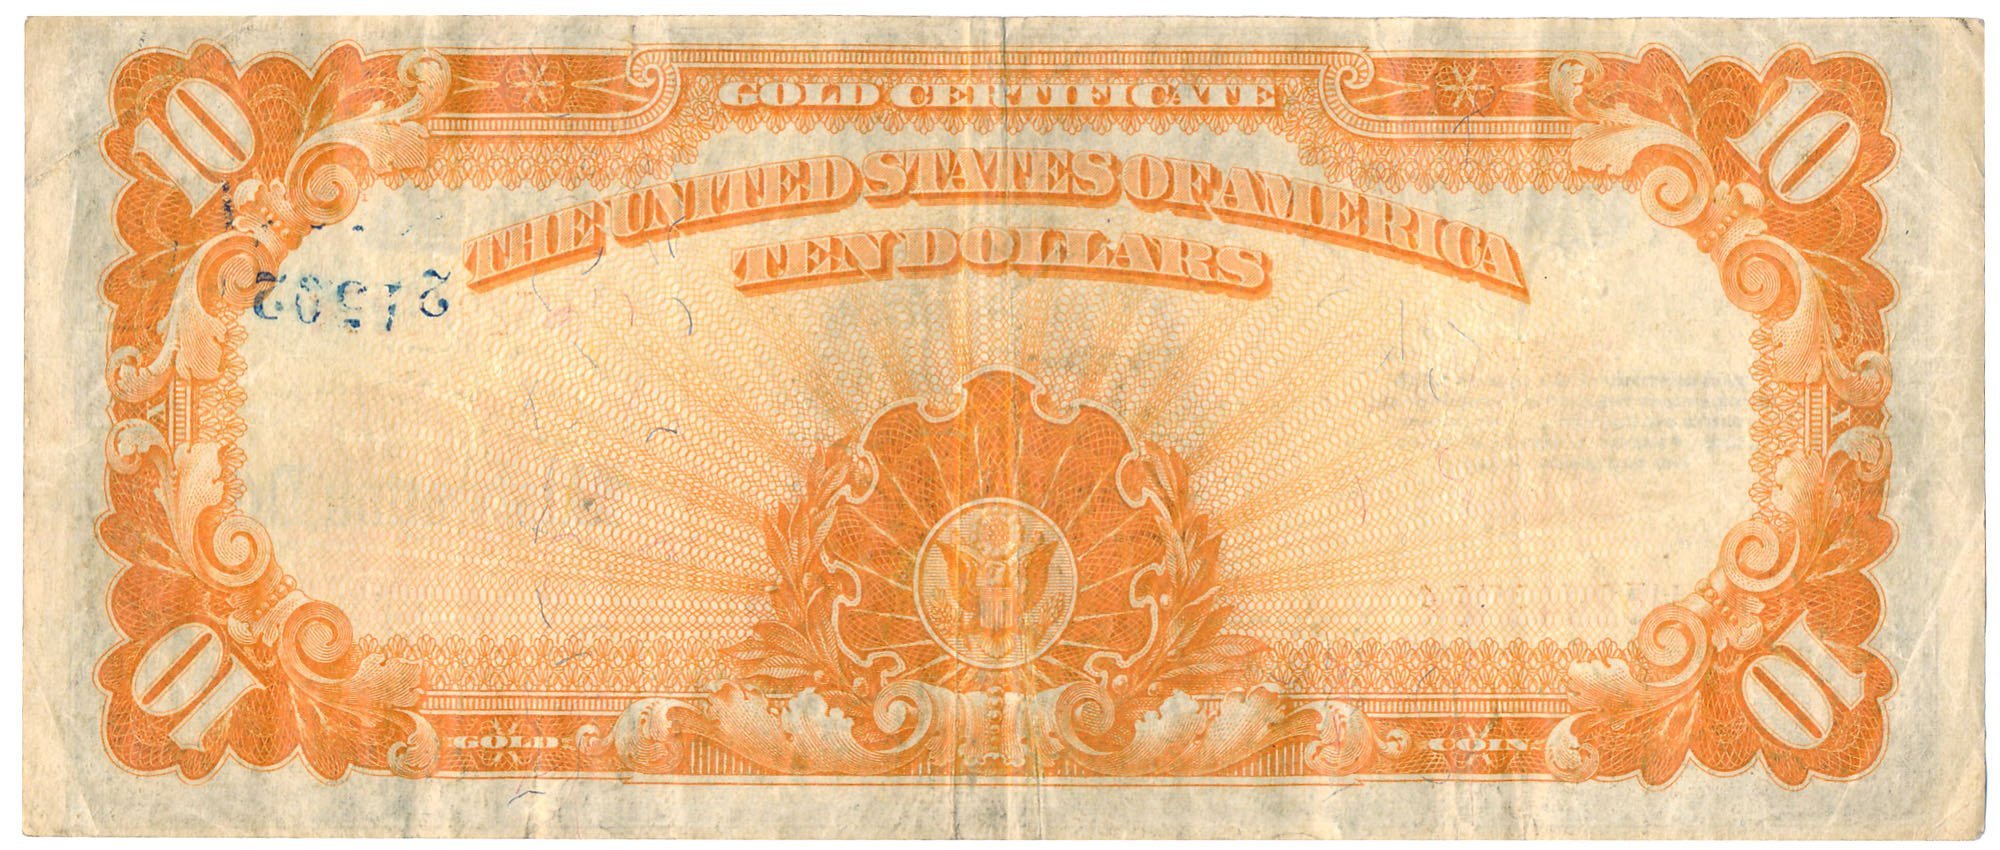 USA. 10 dolarów 1922 Gold certyficate, Large size, seria H